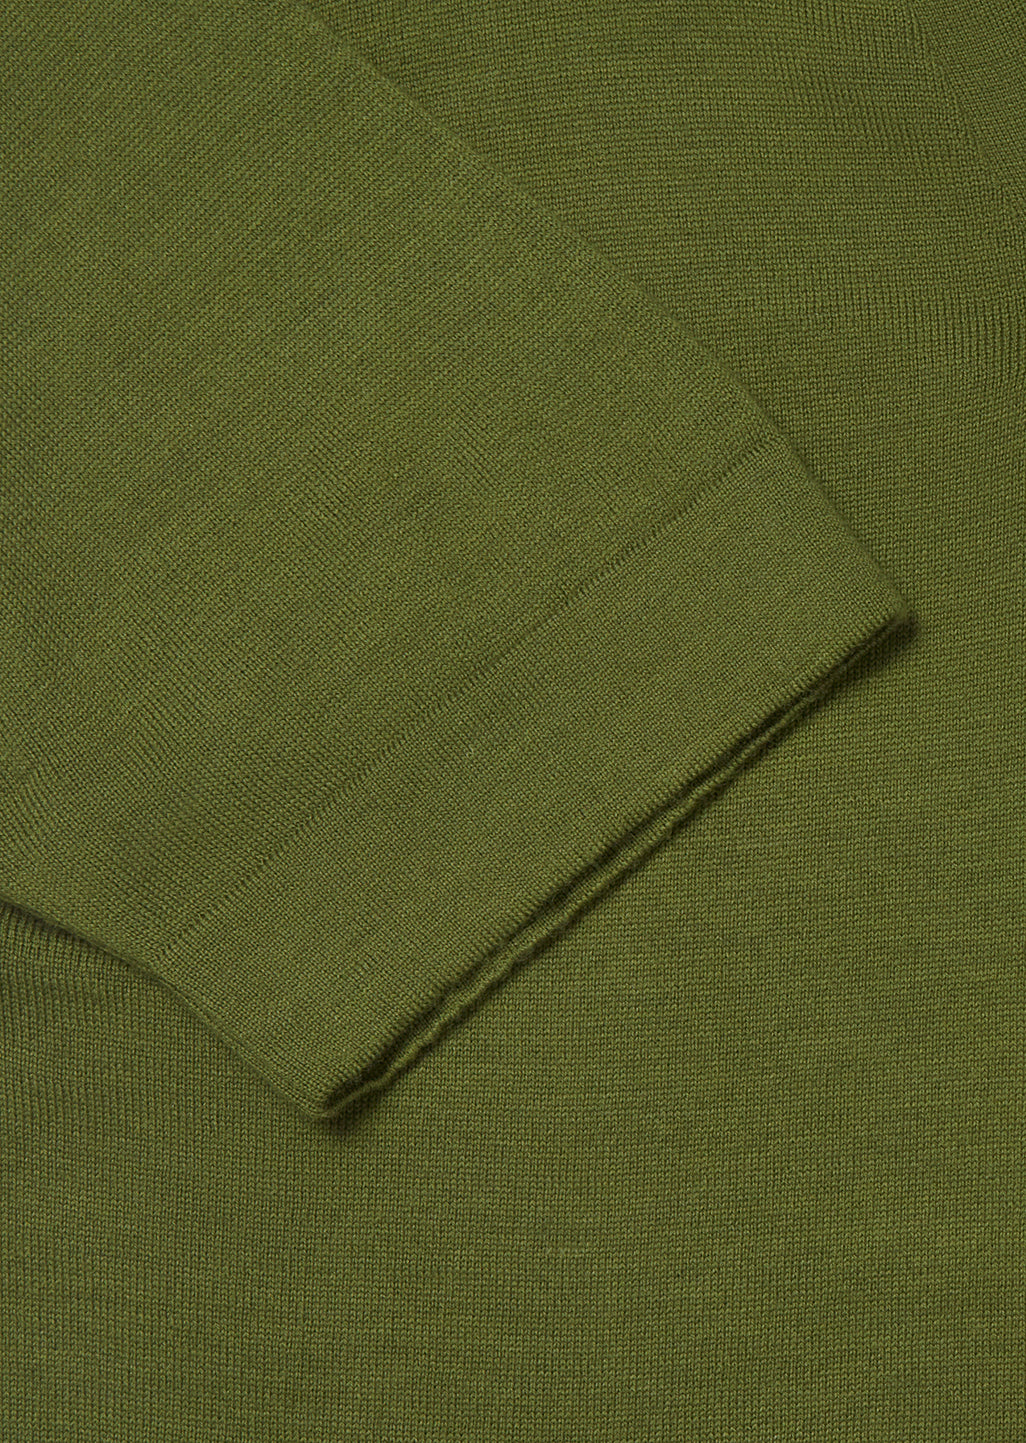 Merino Knit Short Sleeve Polo Shirt in Olive